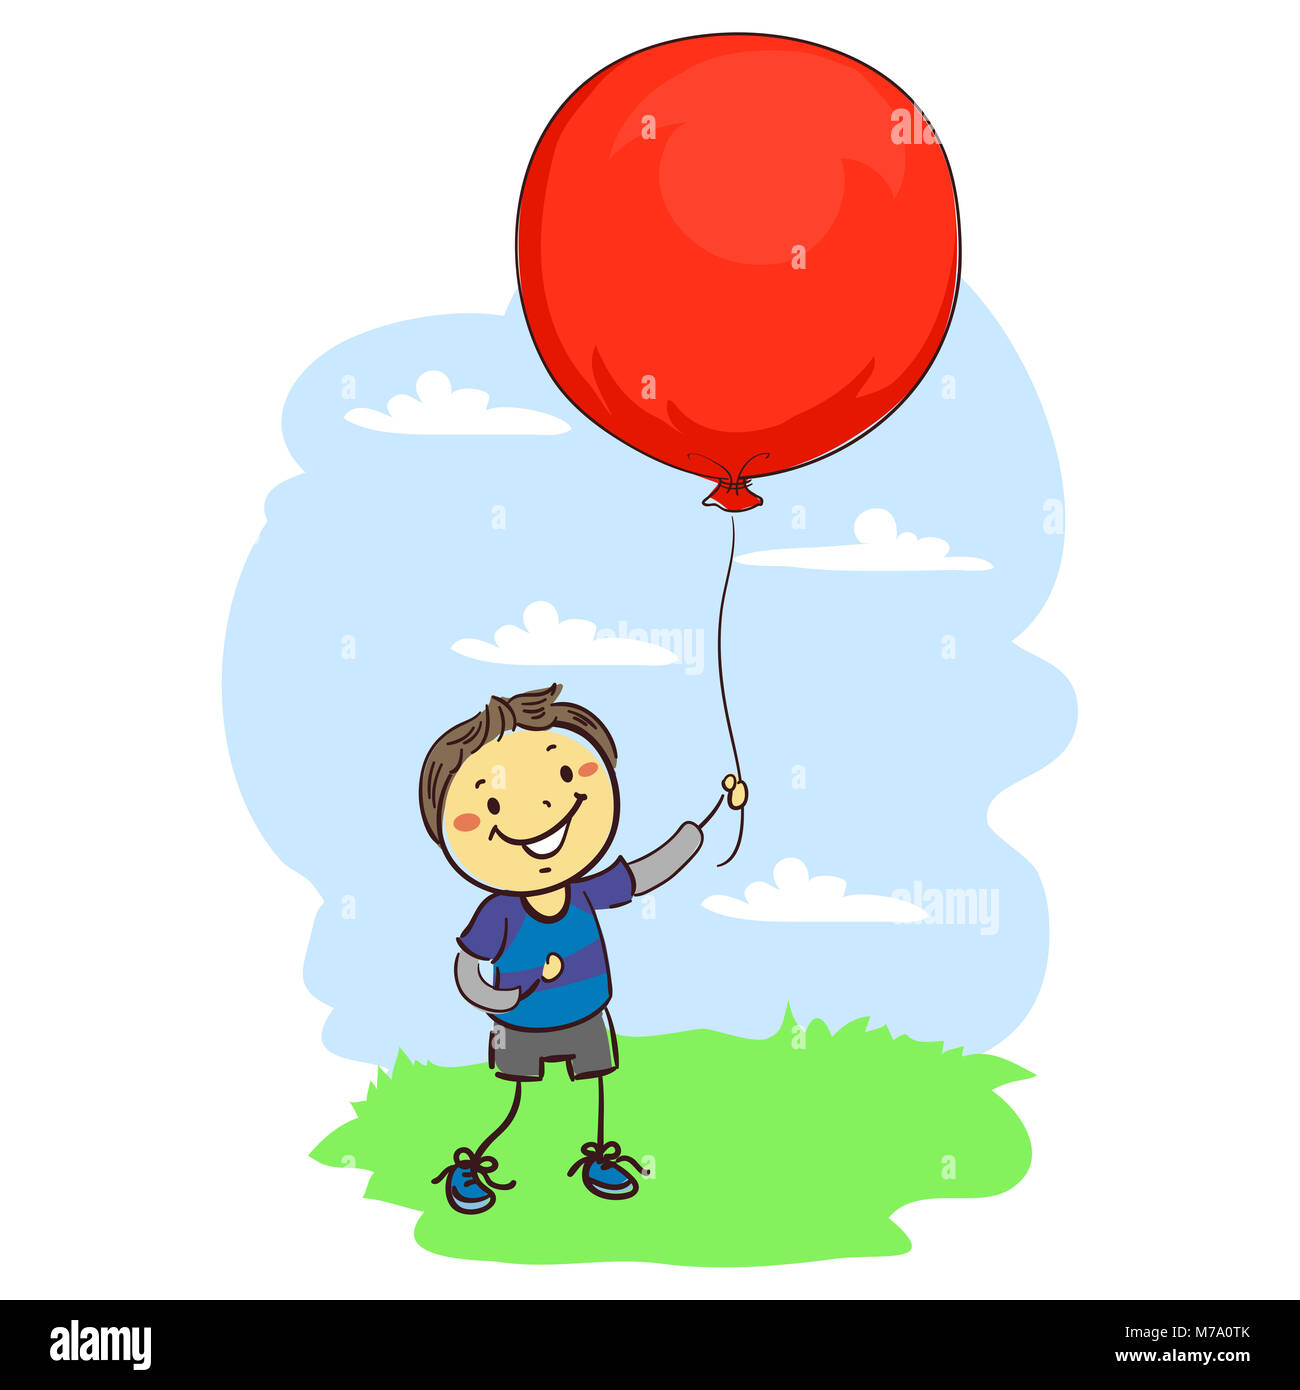 Illustration of Stick Kid Boy Holding a Big Red Balloon Stock Photo - Alamy